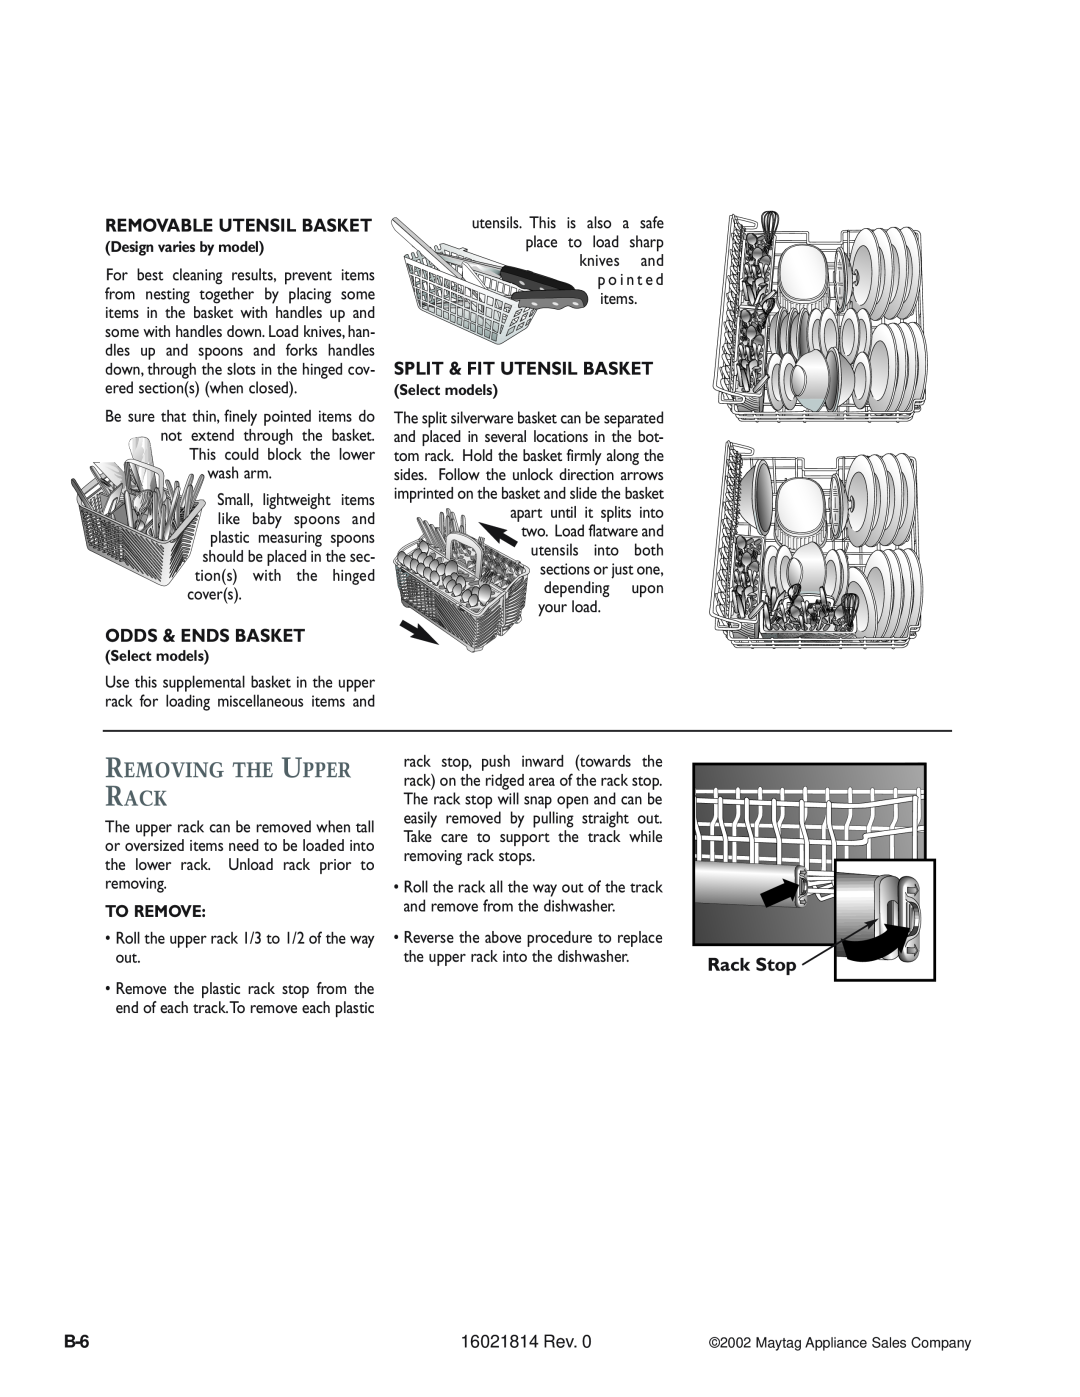 Maytag MDB8600AW manual Removing The Upper Rack, Removable Utensil Basket, Split & Fit Utensil Basket, To Remove, Rack Stop 